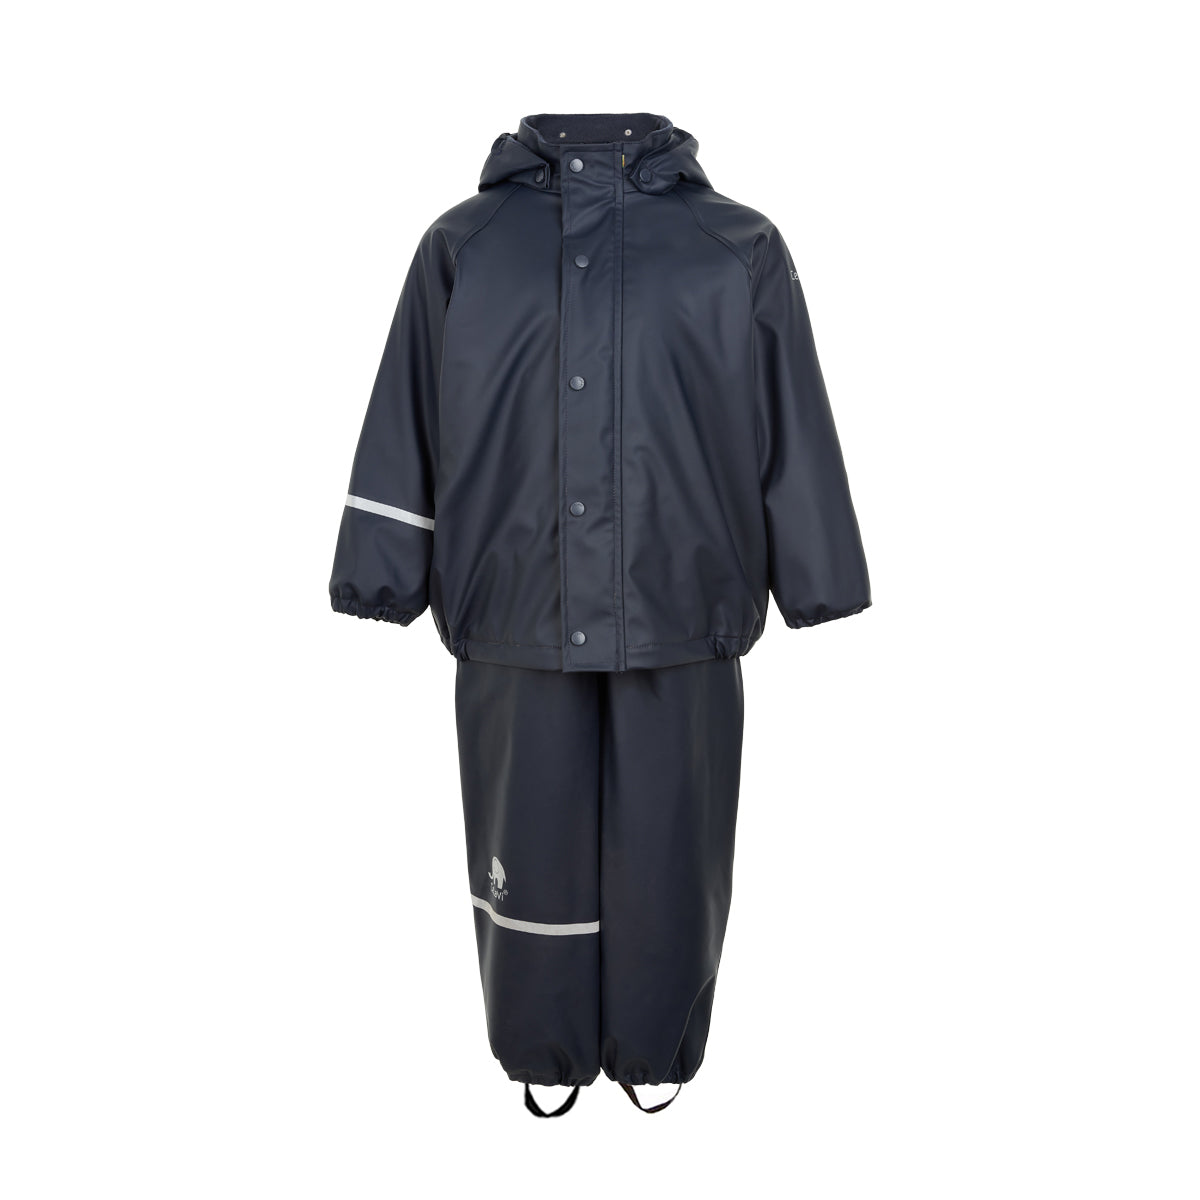 PuddleDucks for – ages 5-9 Rainwear suitable